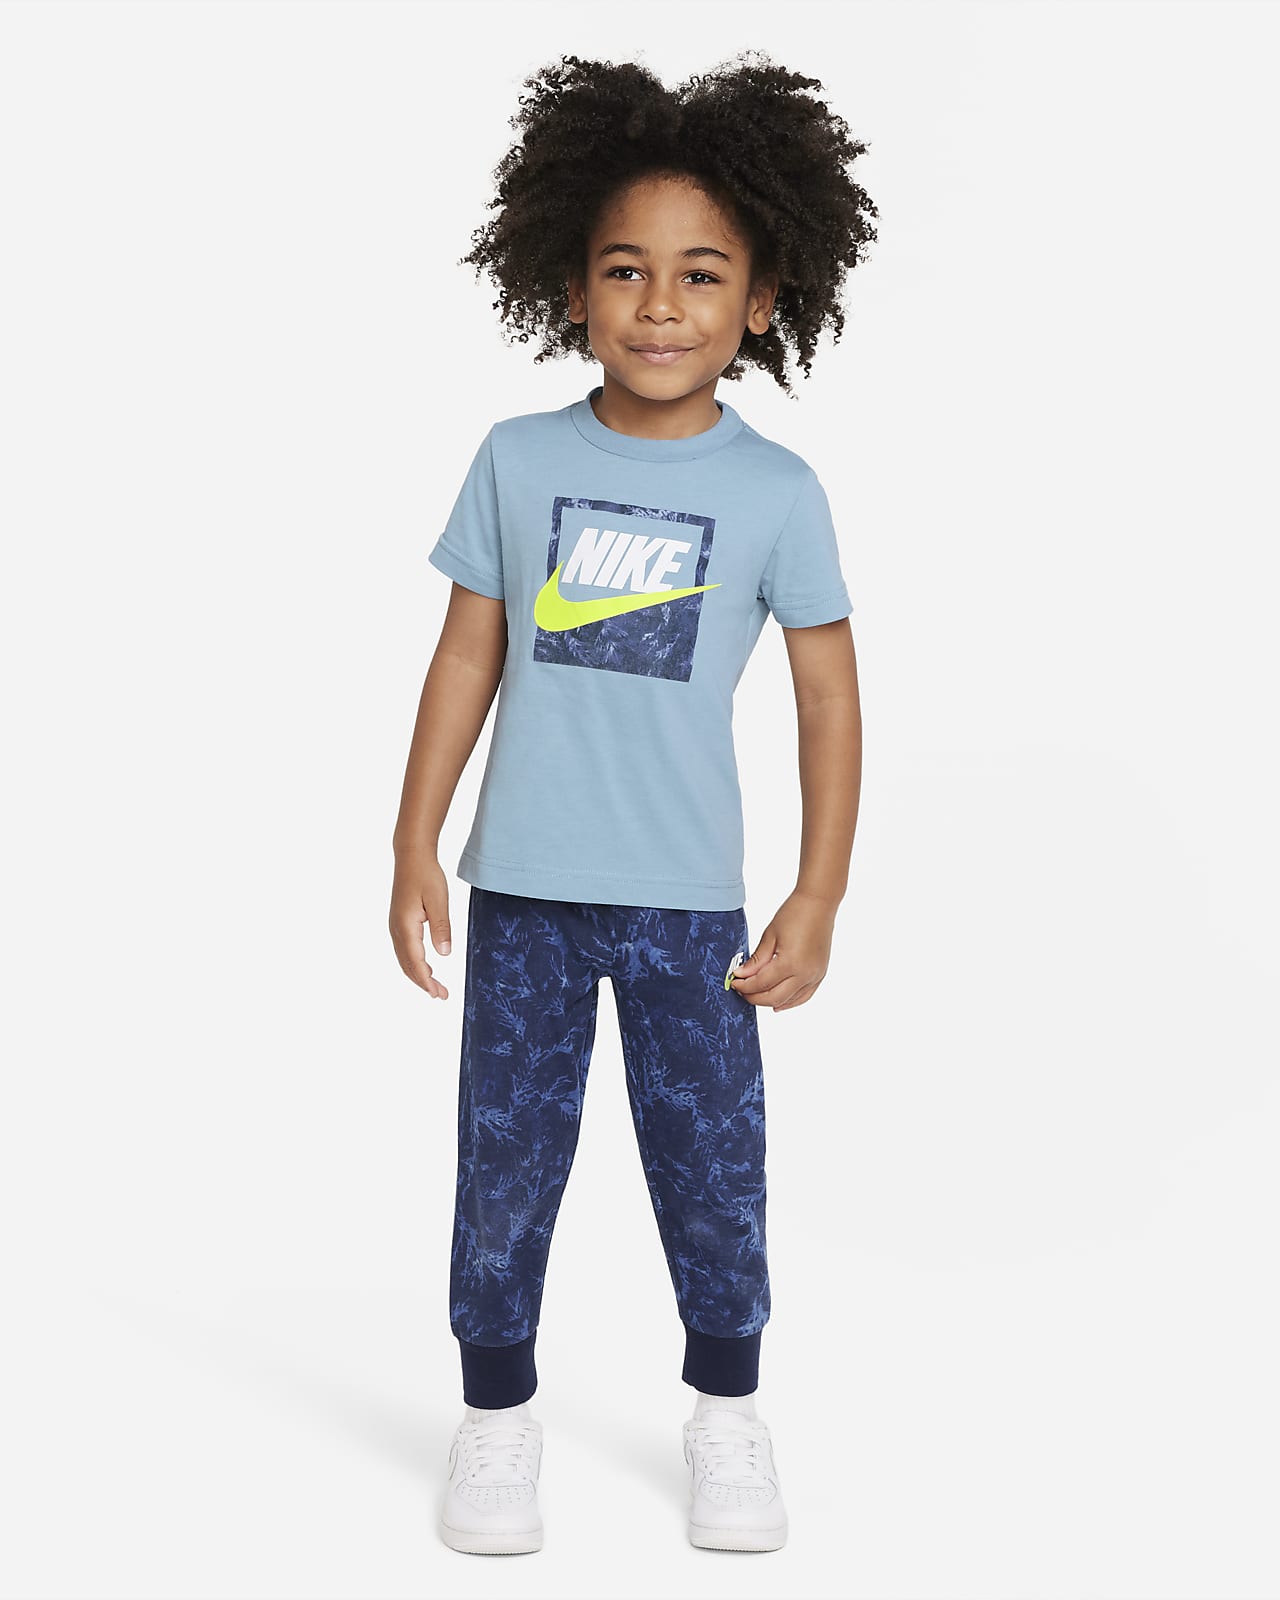 Nike Toddler T-Shirt and Pants Set. 